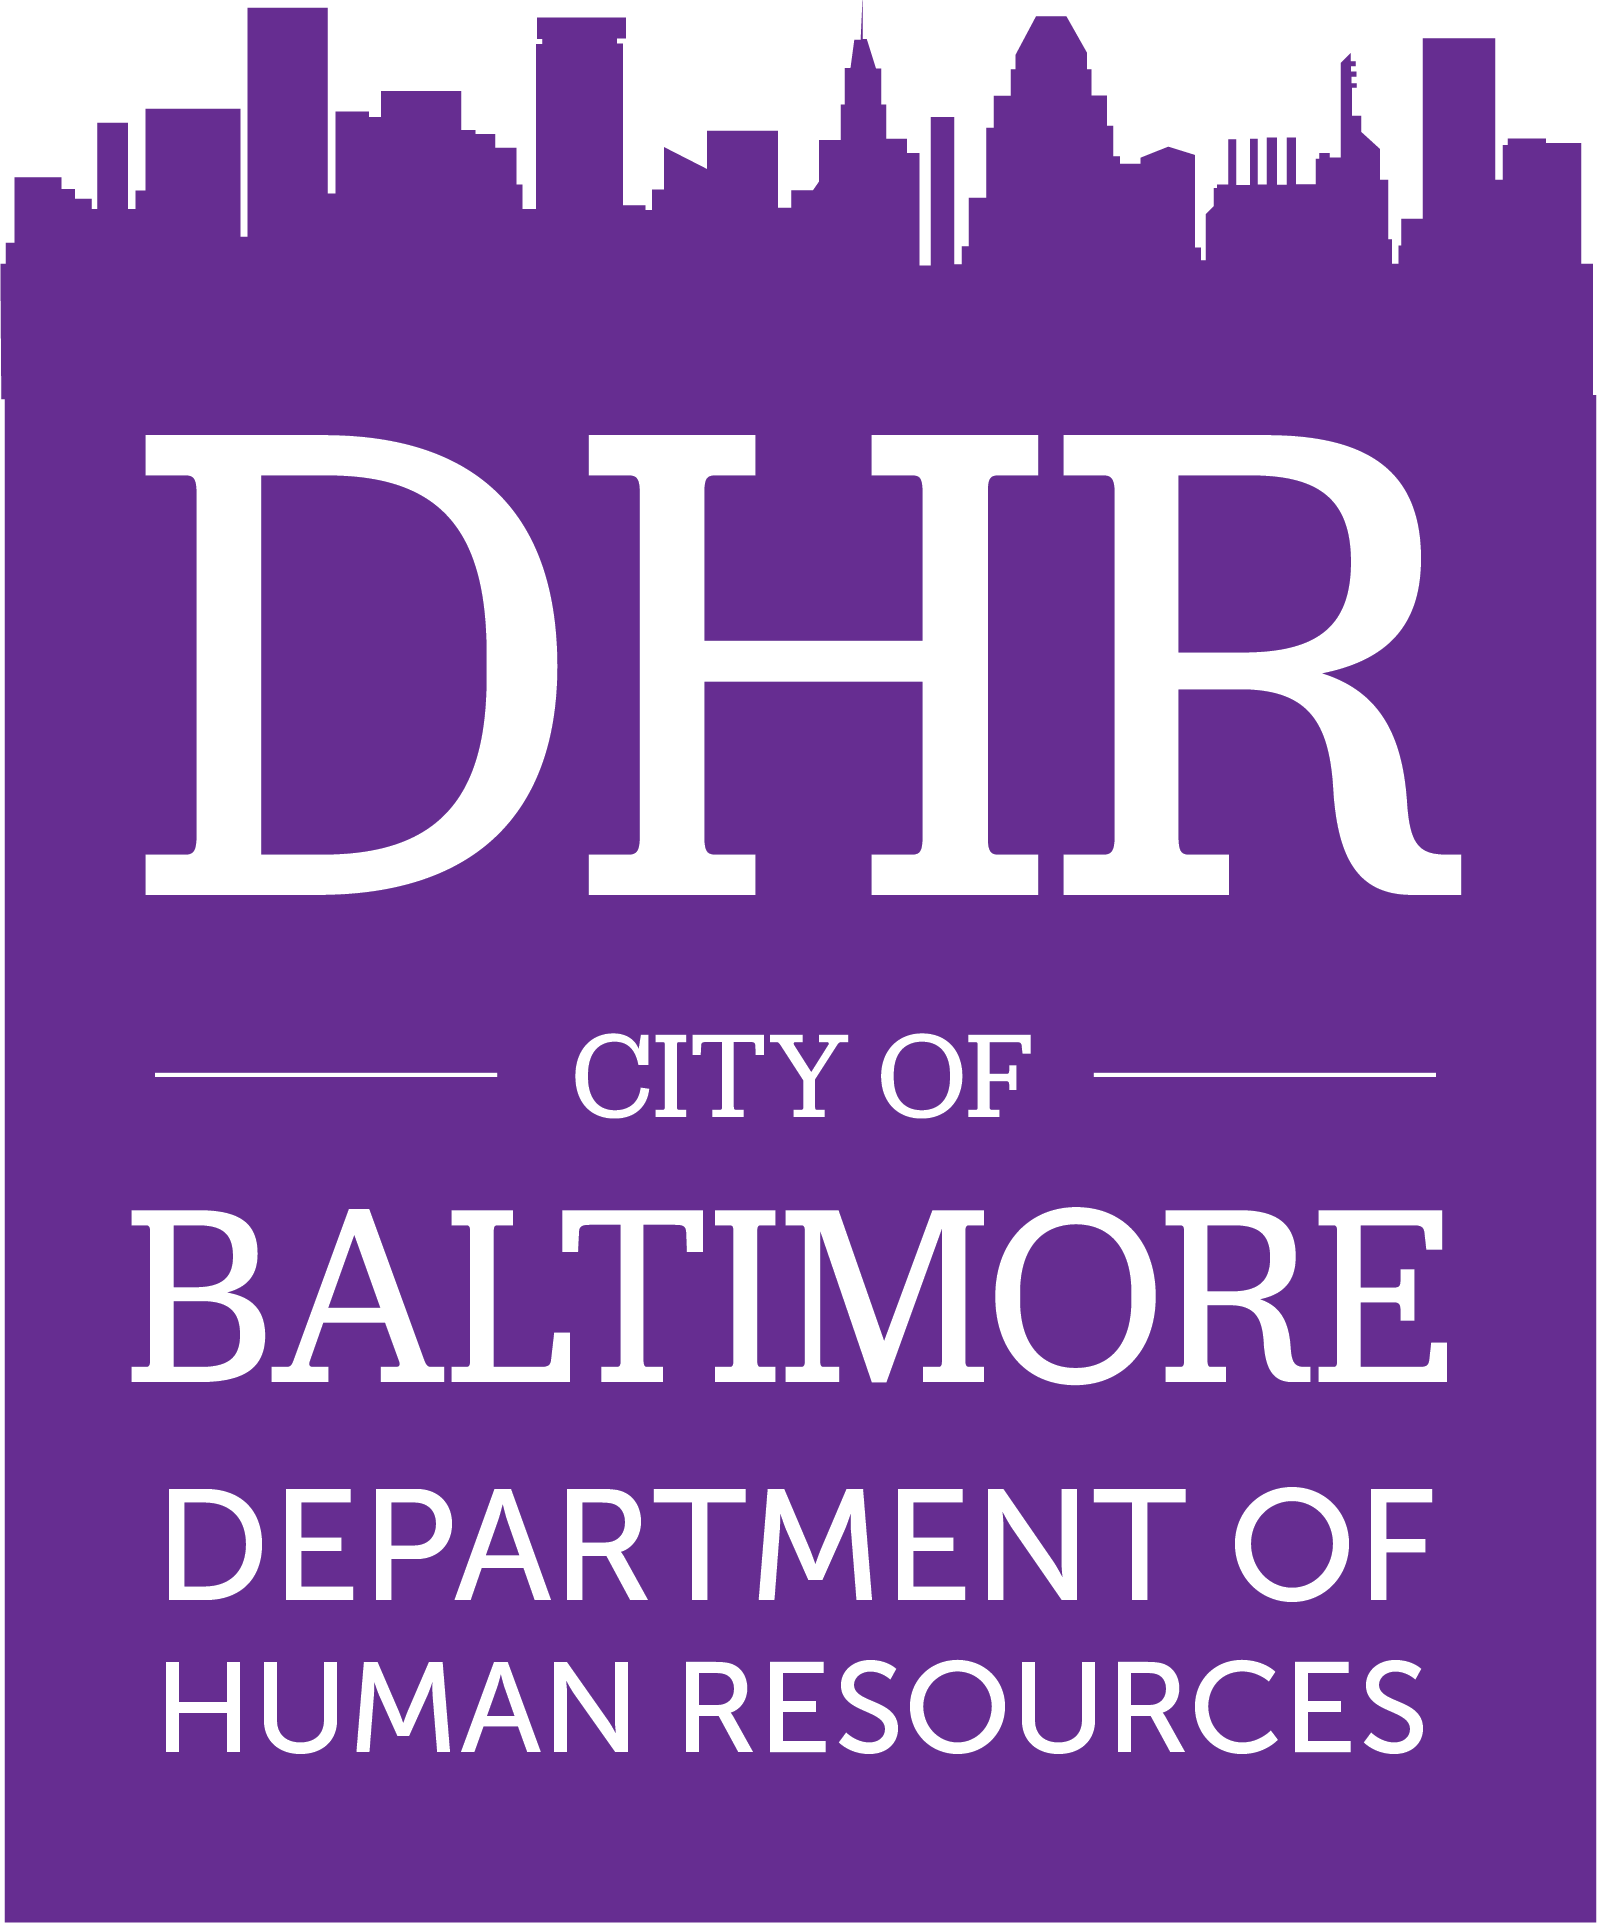 Human Resources Information Technology (HRIS)